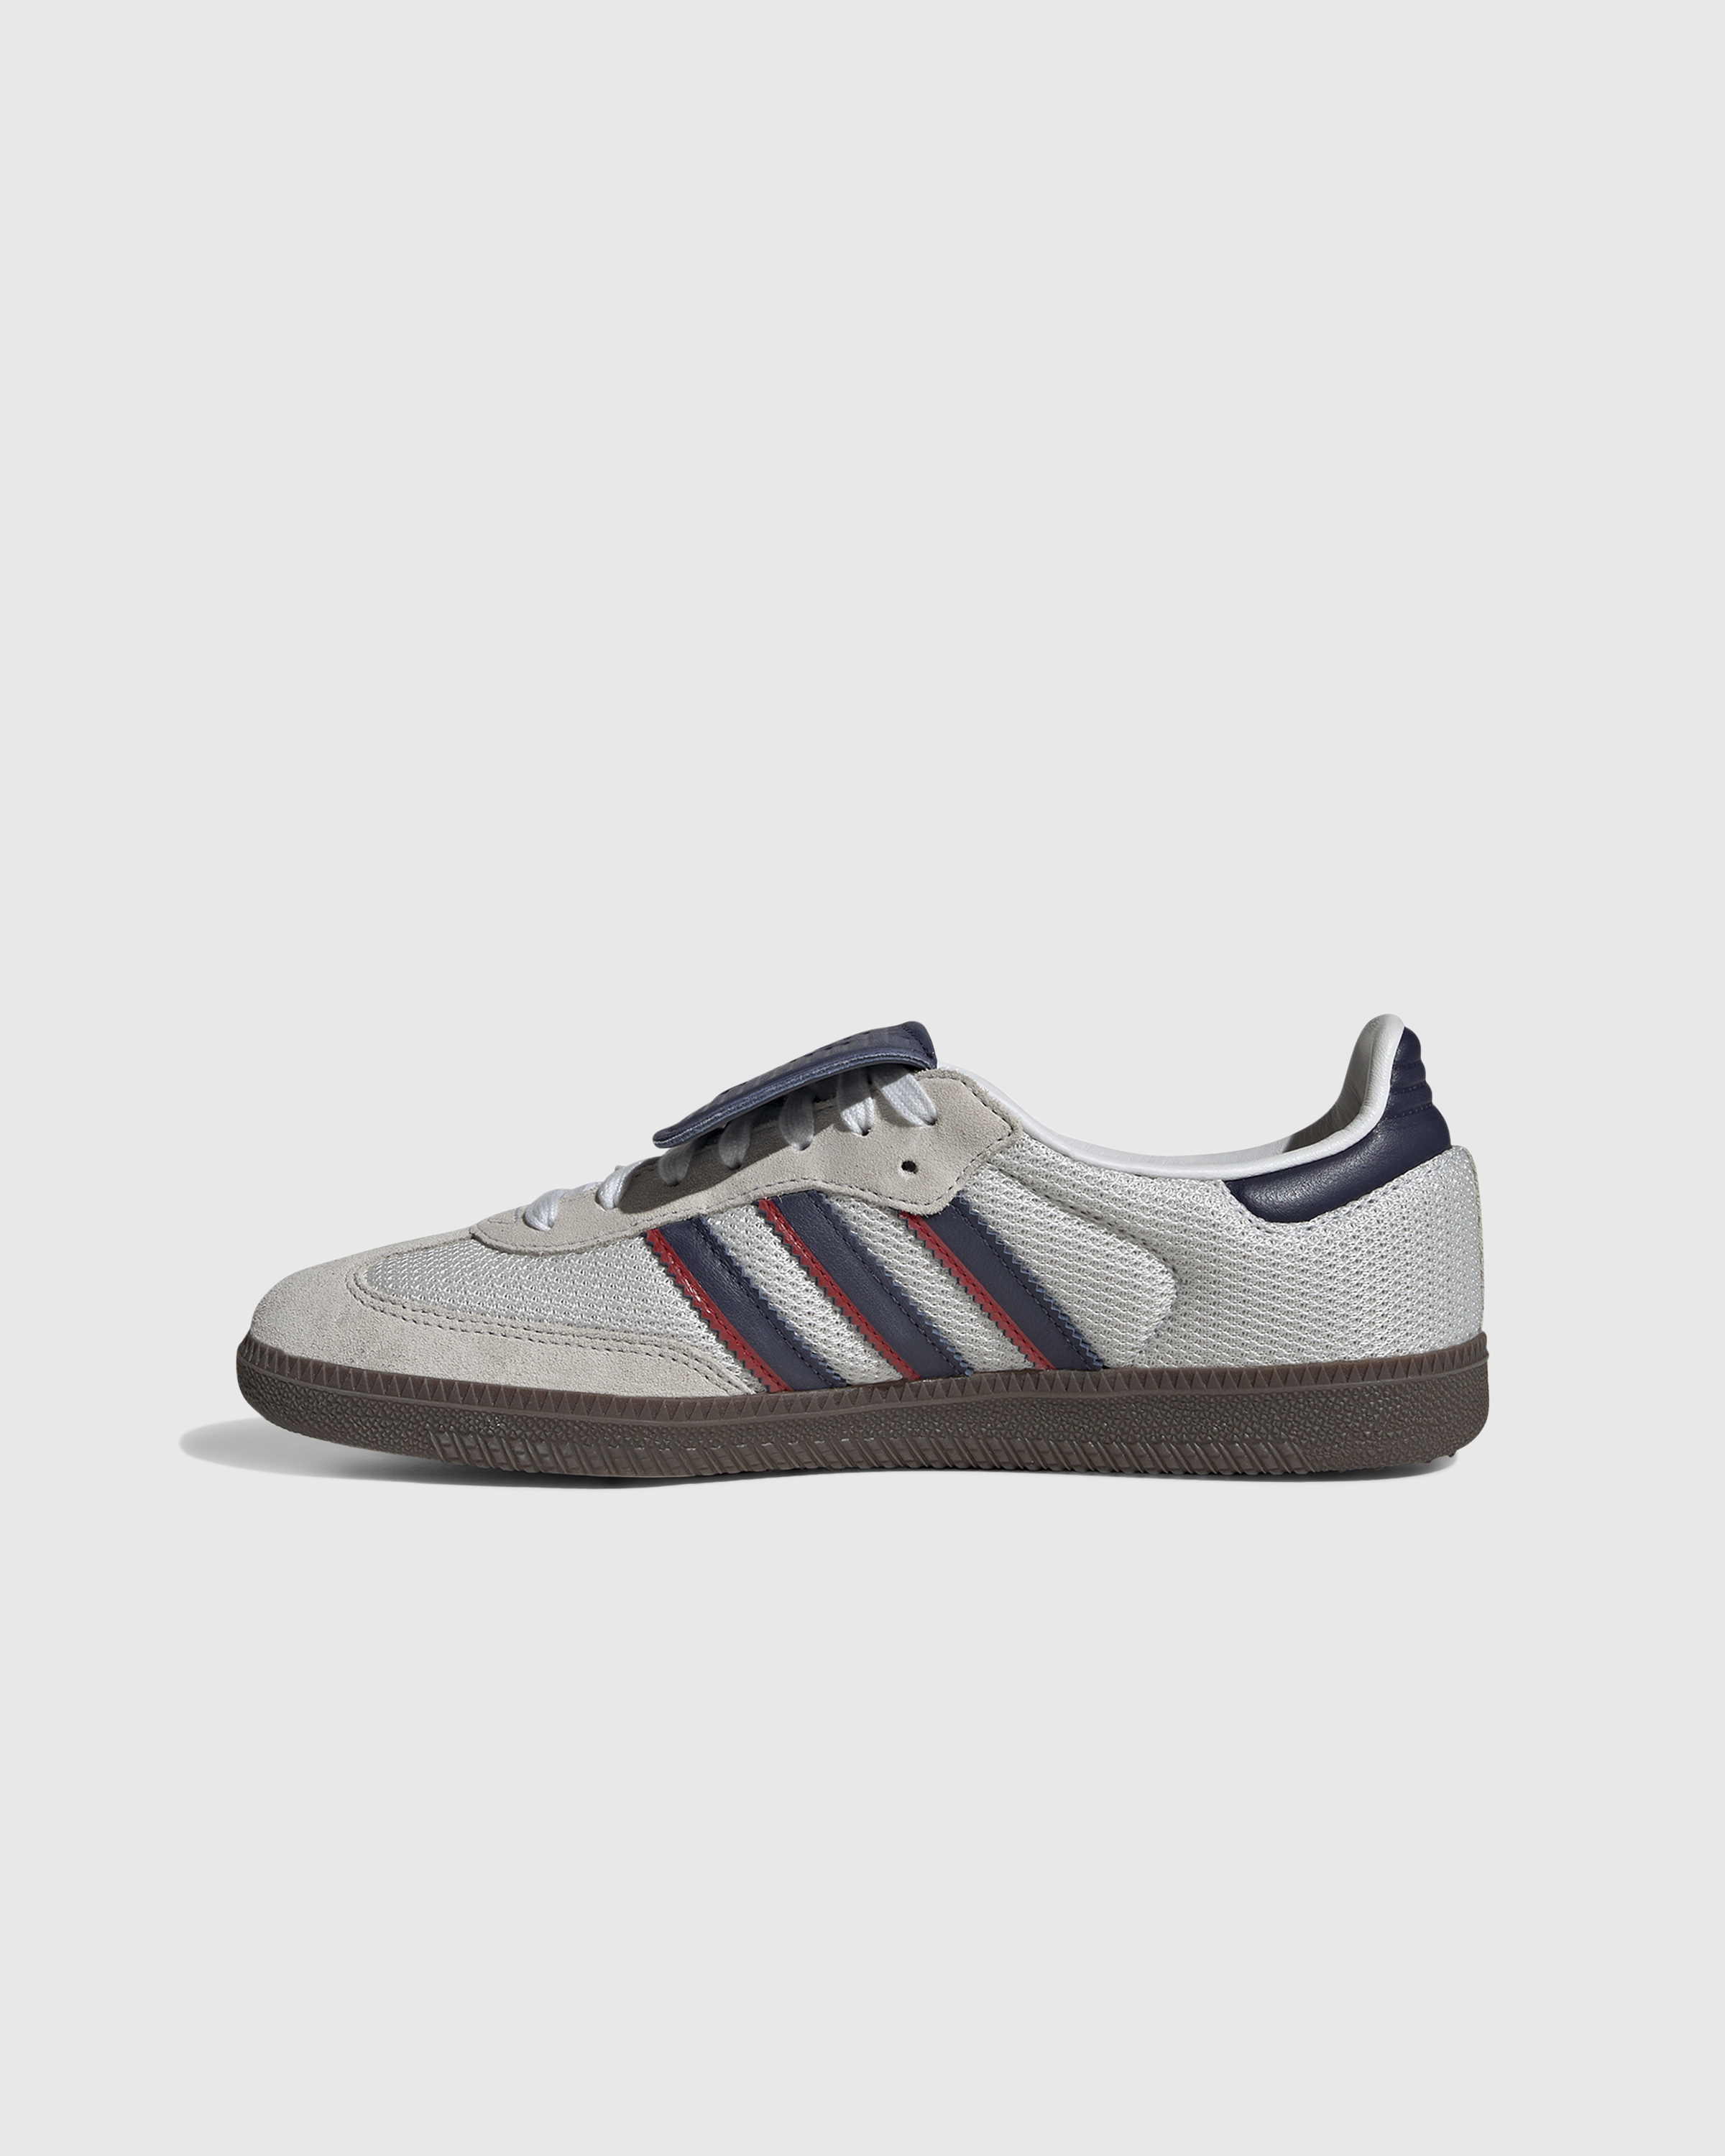 Adidas – Samba LT White/Blue/Gum - Low Top Sneakers - White - Image 2